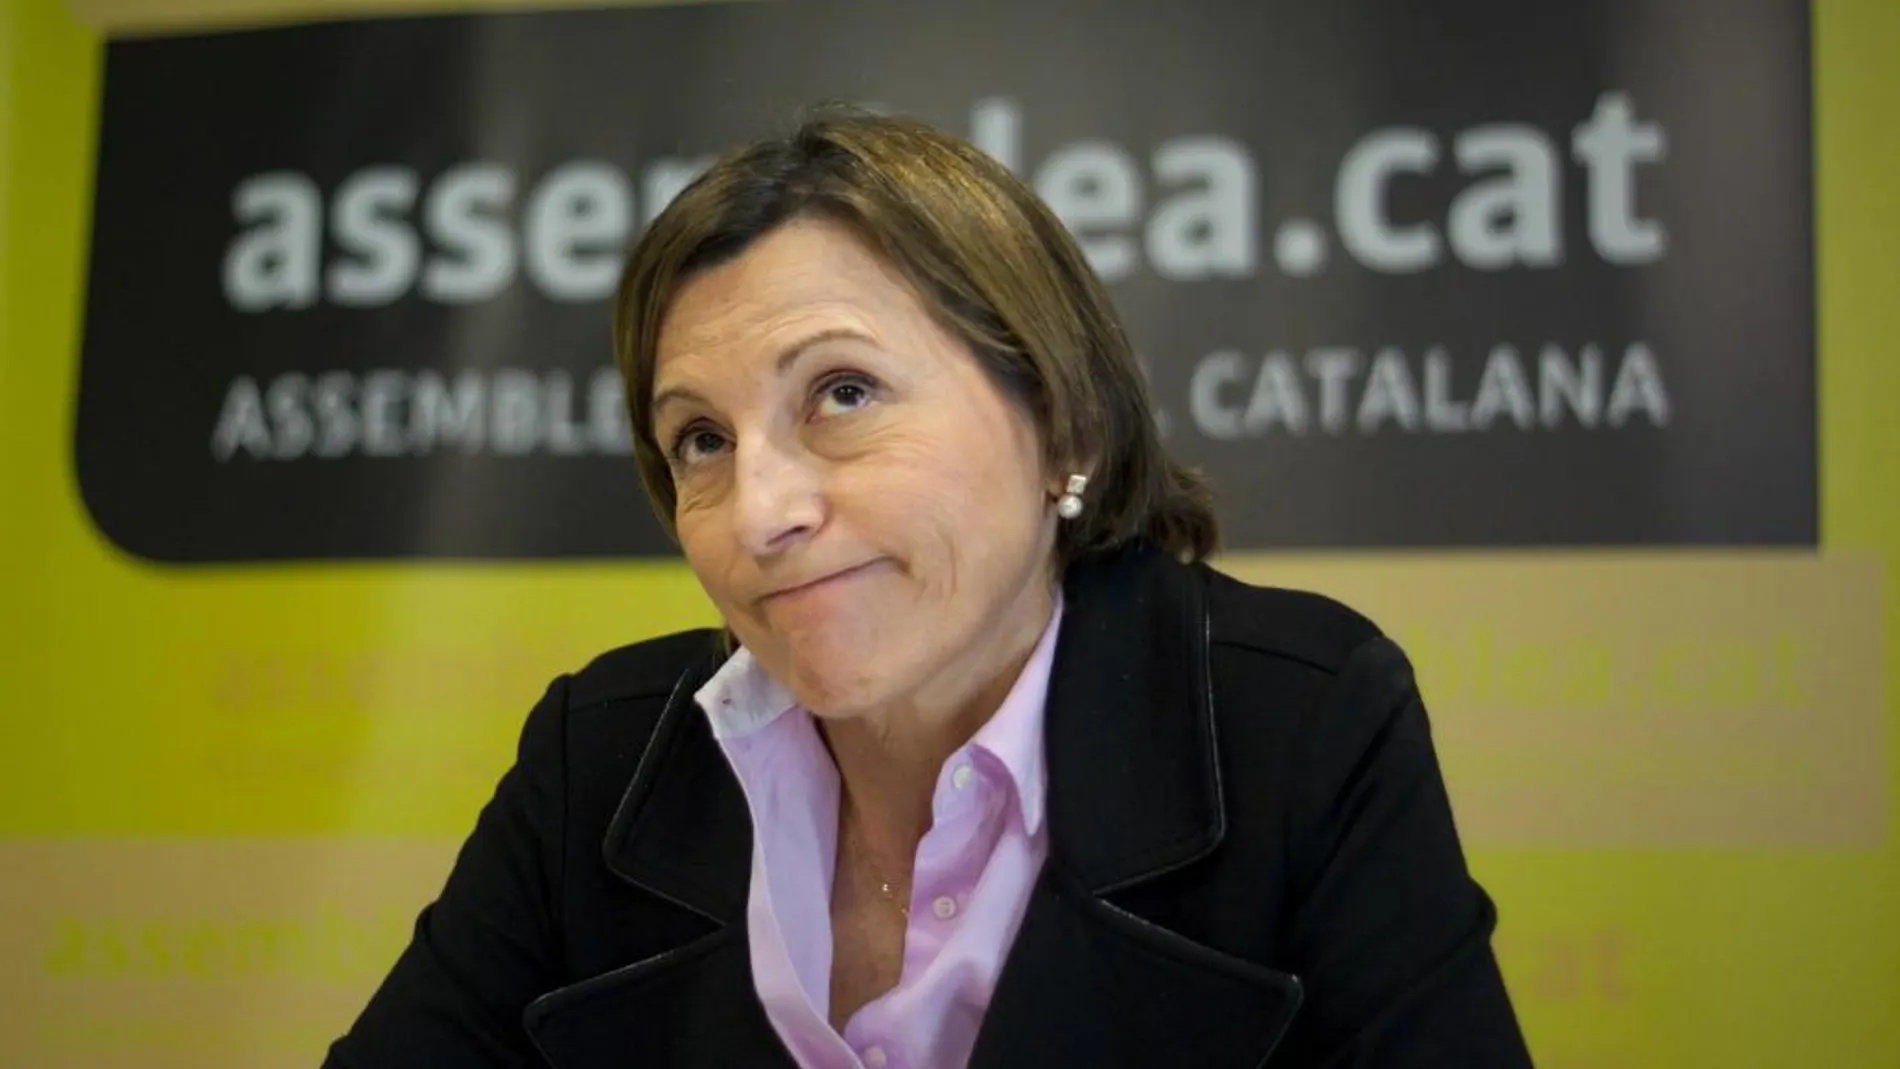 La presidenta de la Assemblea Nacional Catalana (ANC), Carme Forcadell